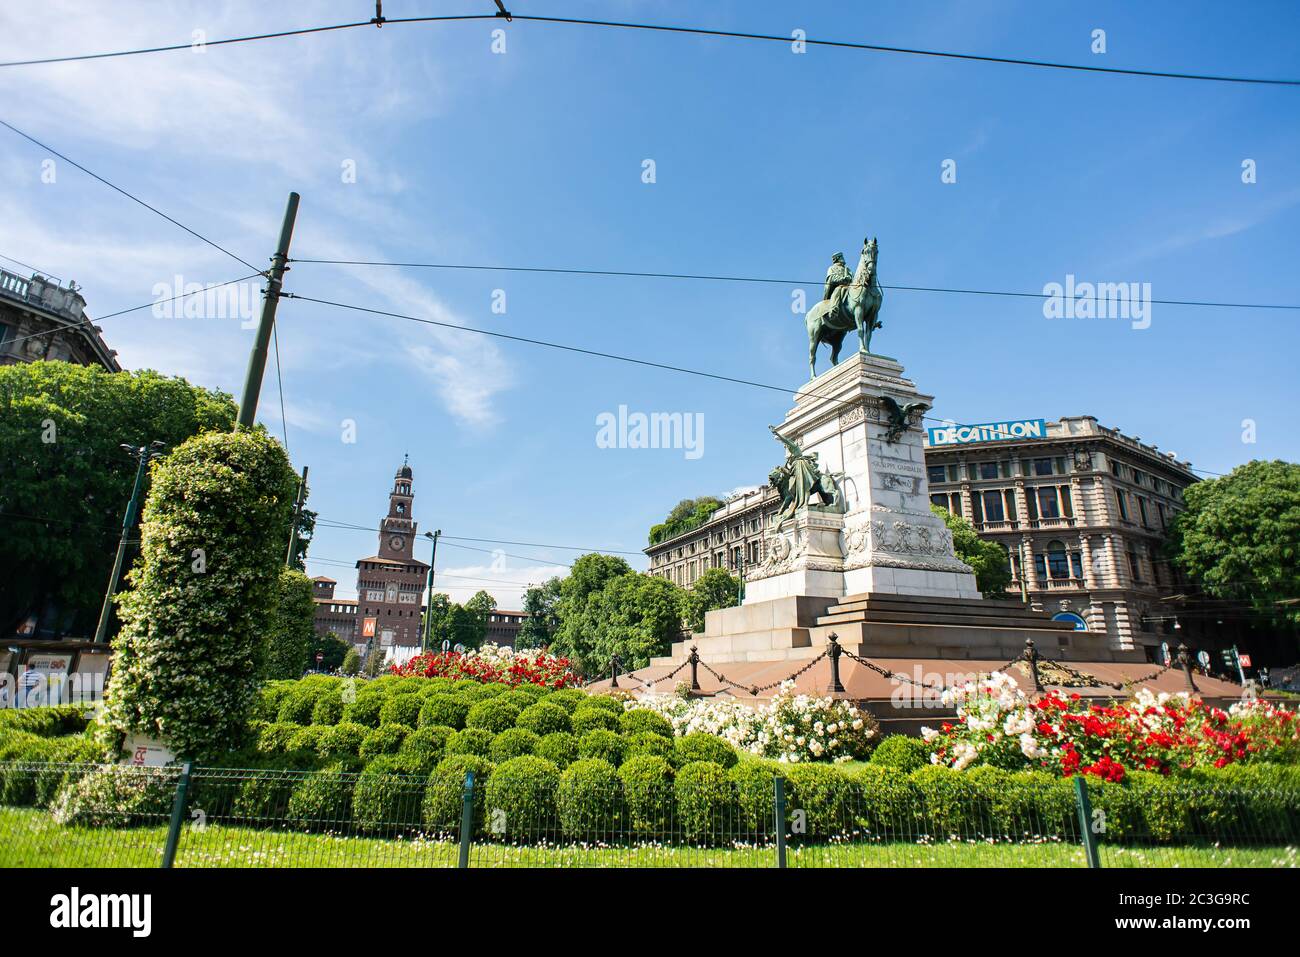 Mailand. Italien - 21. Mai 2019: Giuseppe Garibaldi Denkmal in Mailand und Castello Sforzesco. Cairoli Platz. Stockfoto